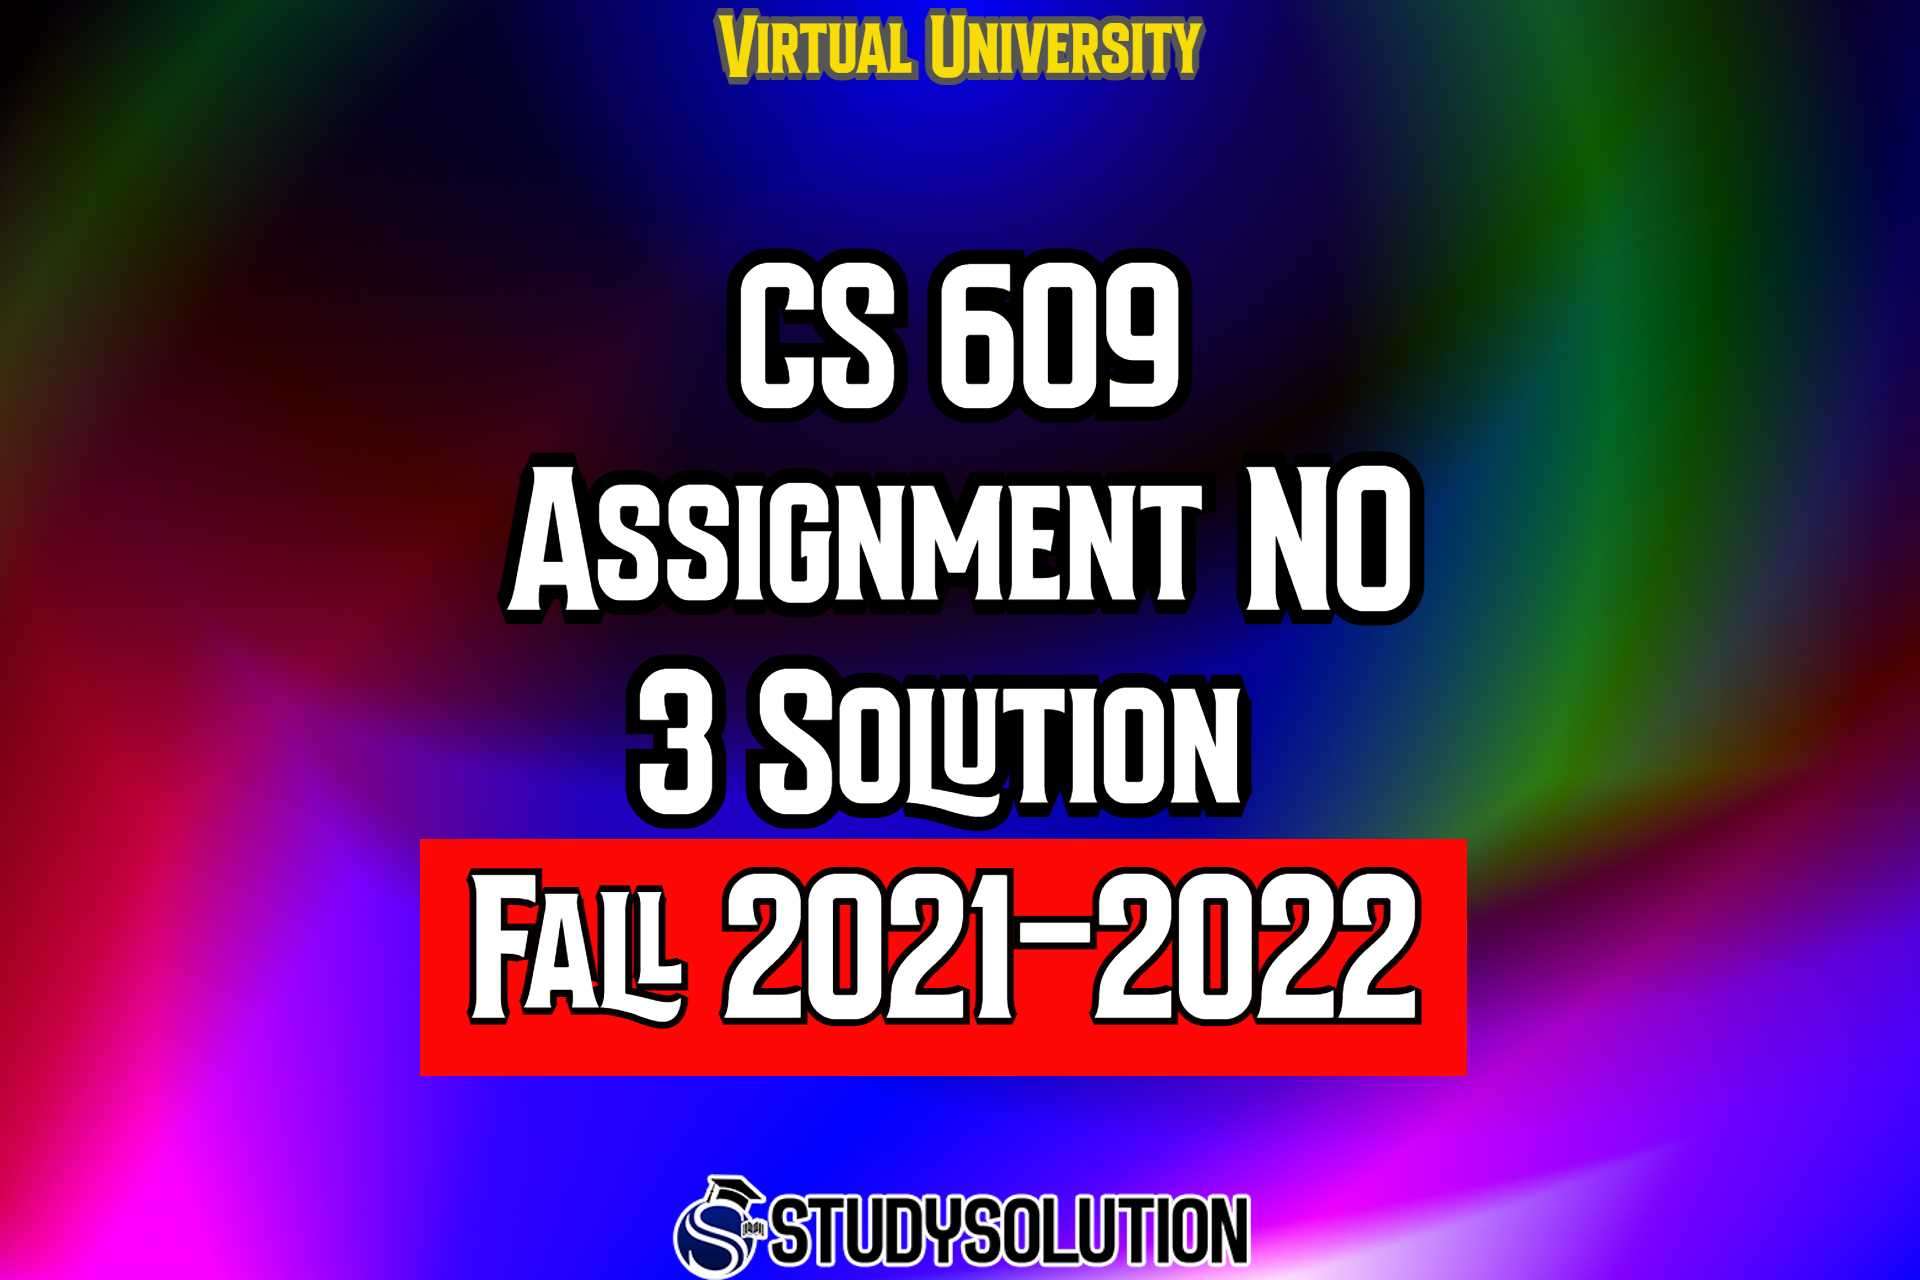 CS609 Assignment No 3 Solution Fall 2022